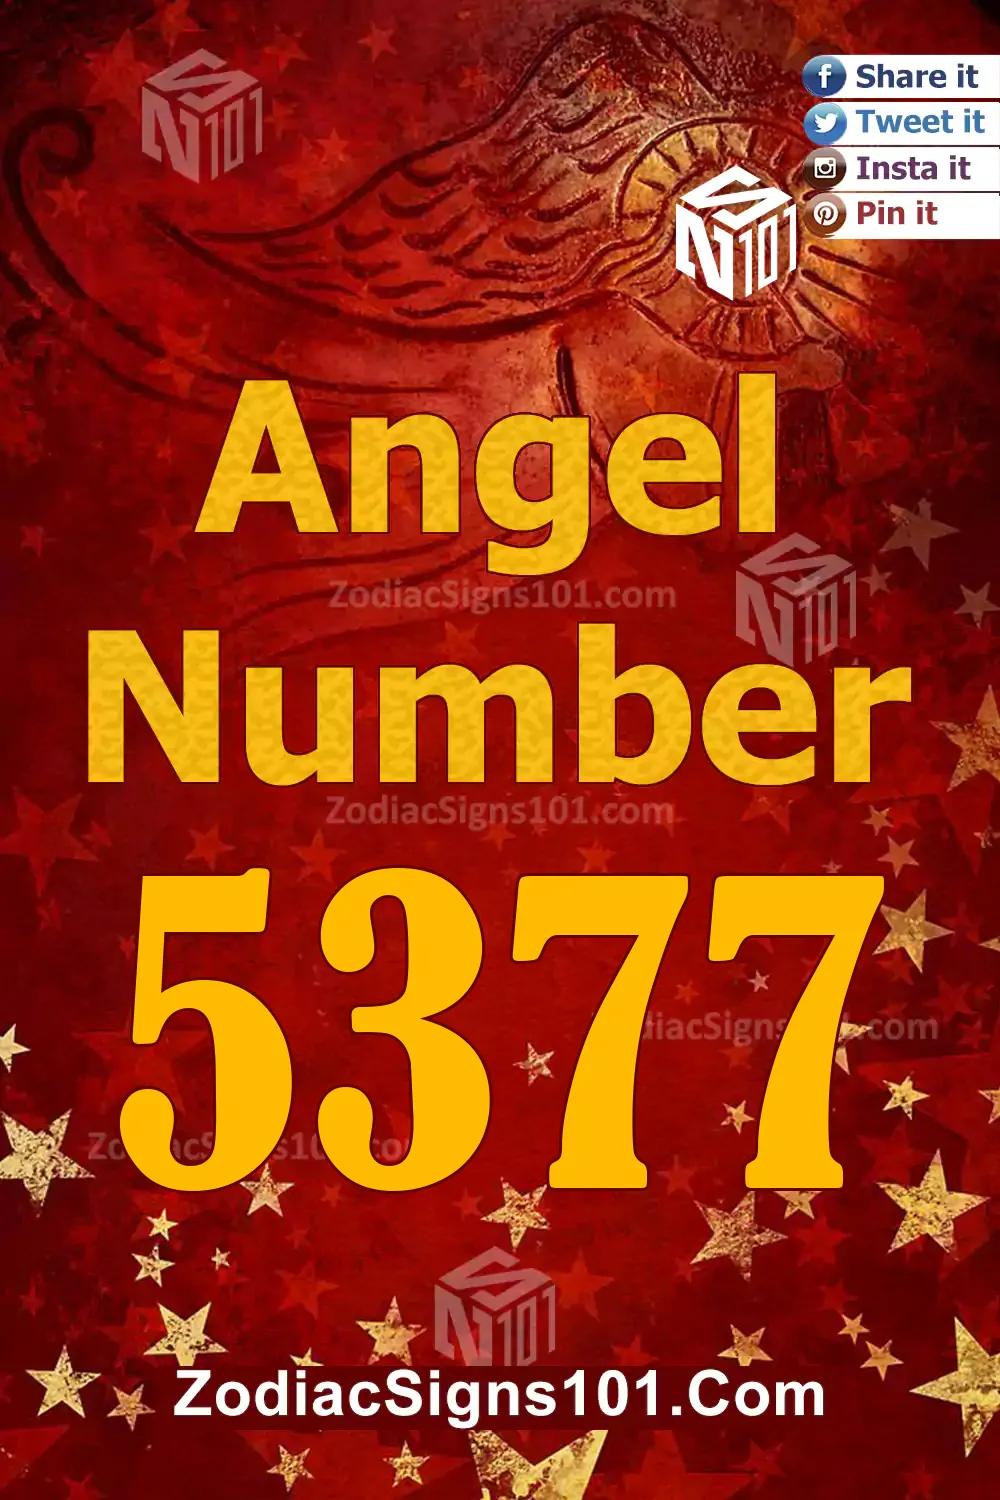 5377-Angel-Number-Meaning.jpg